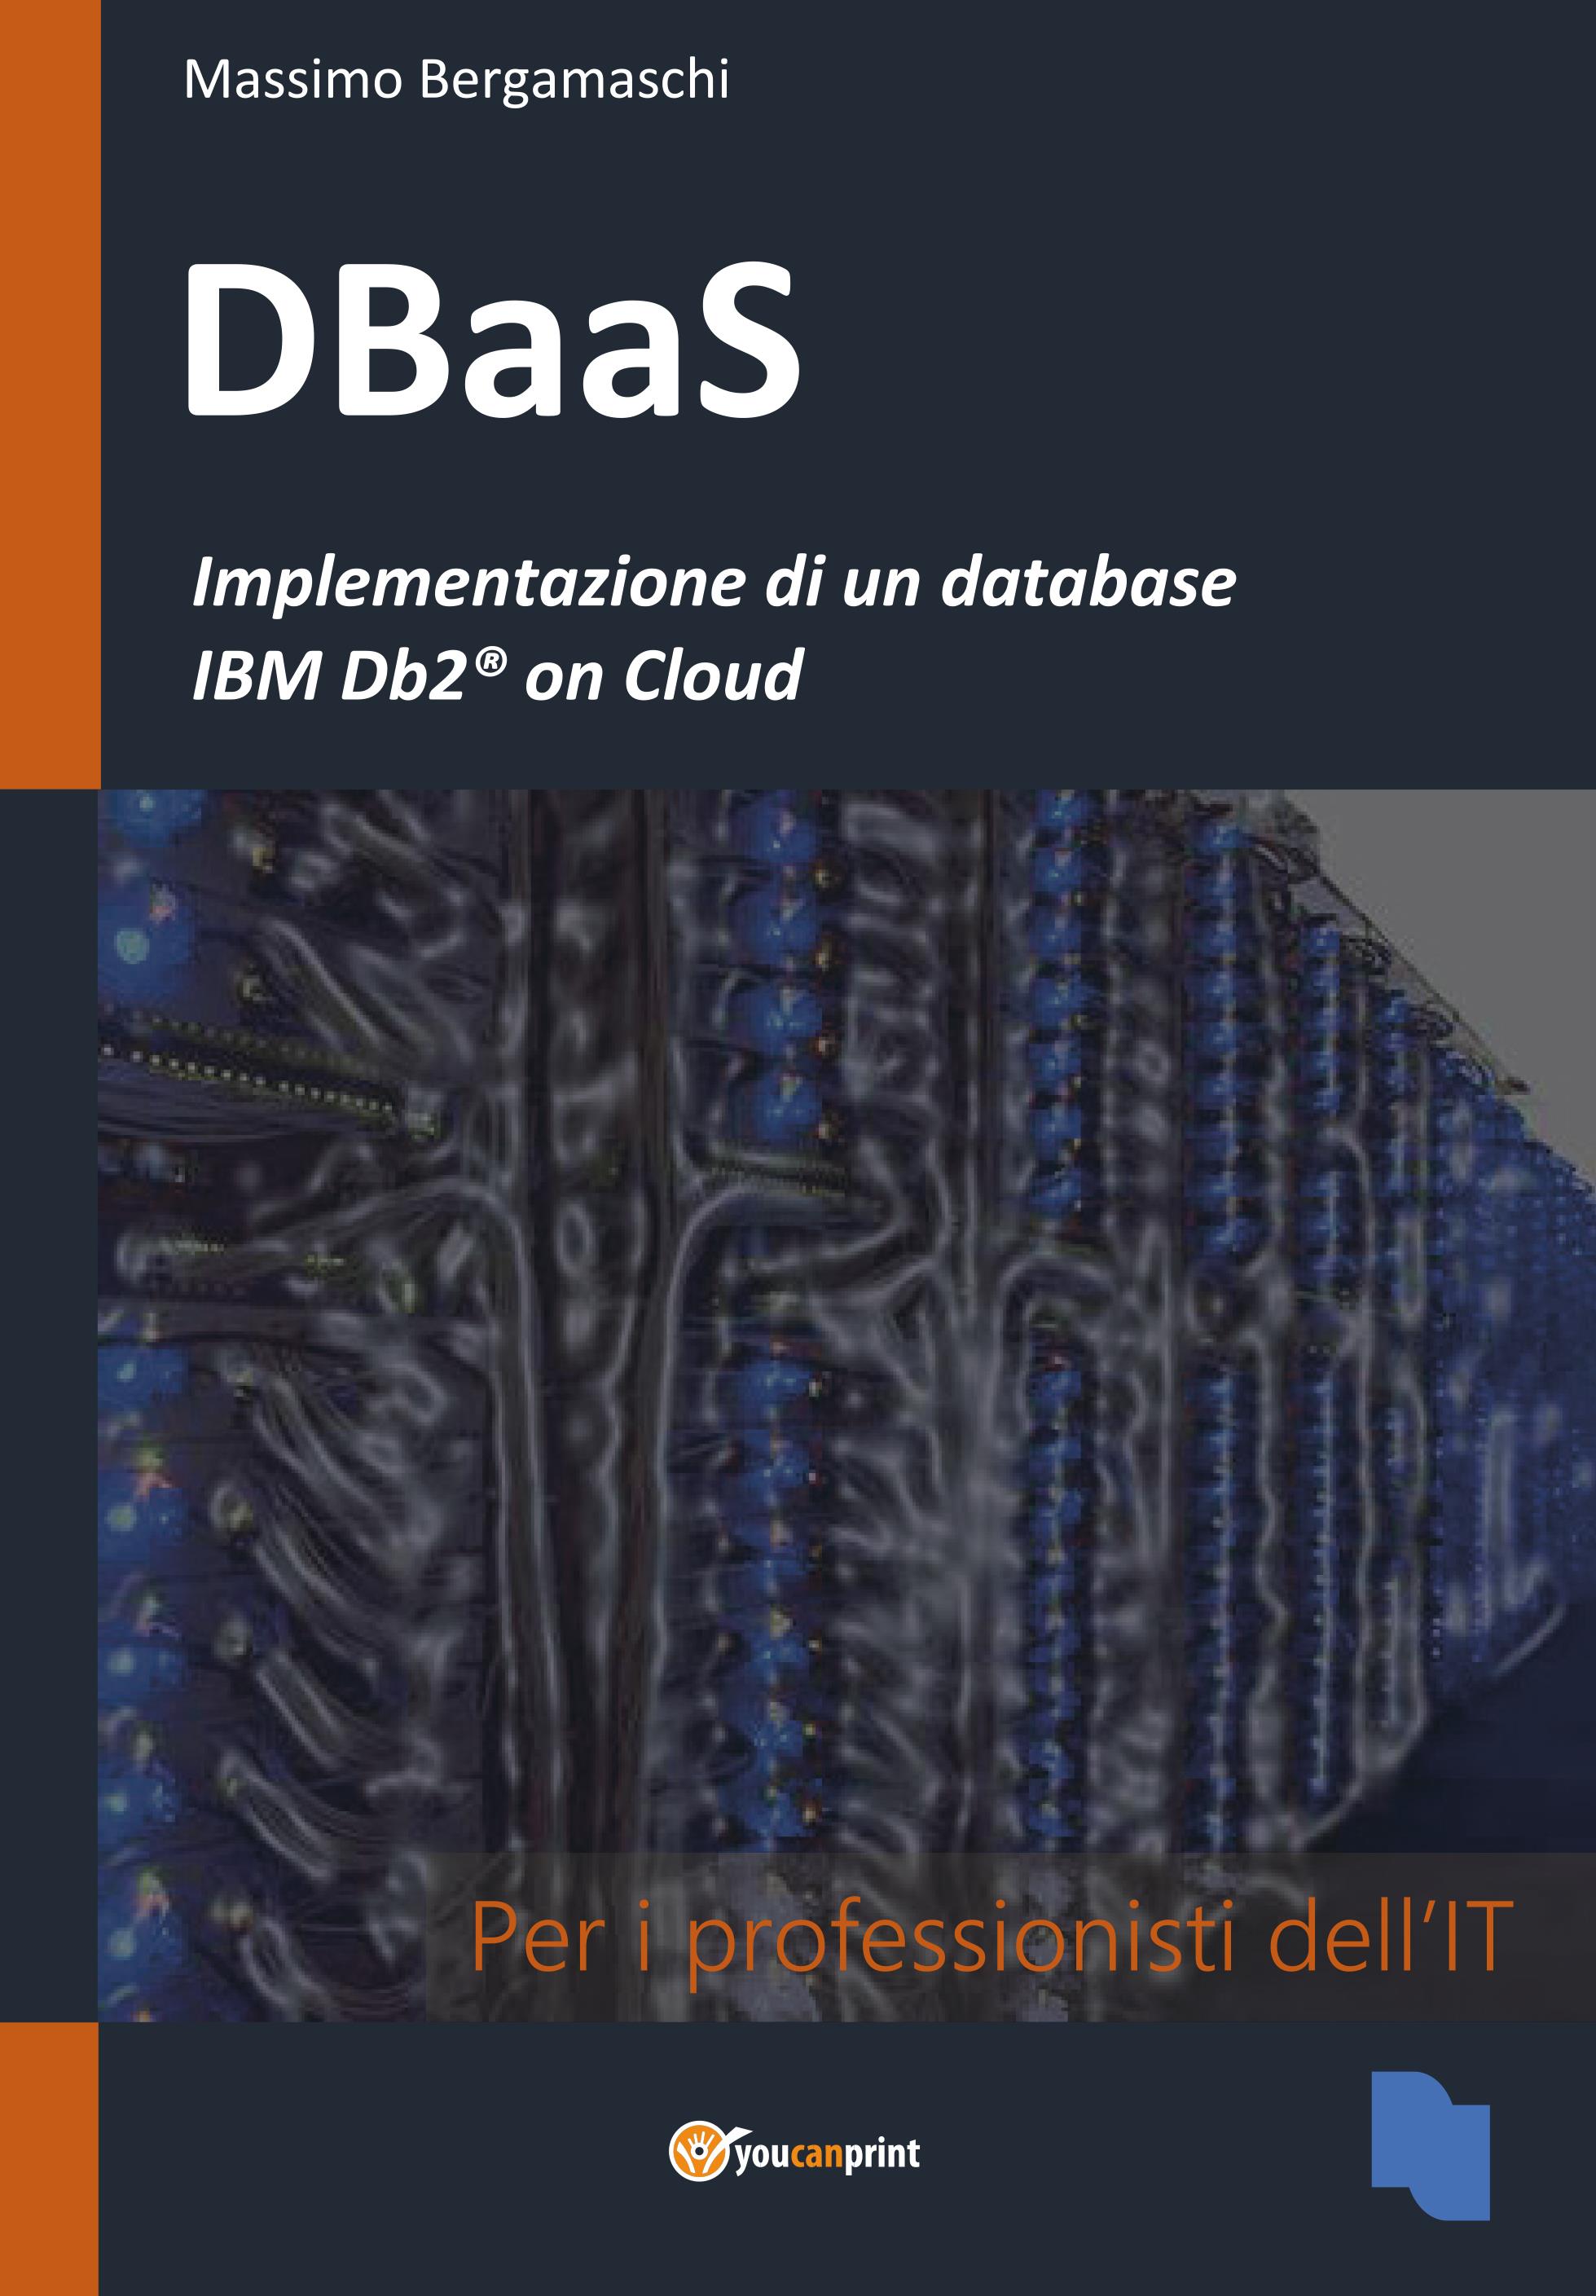 Implementazione di un database IBM Db2 on Cloud